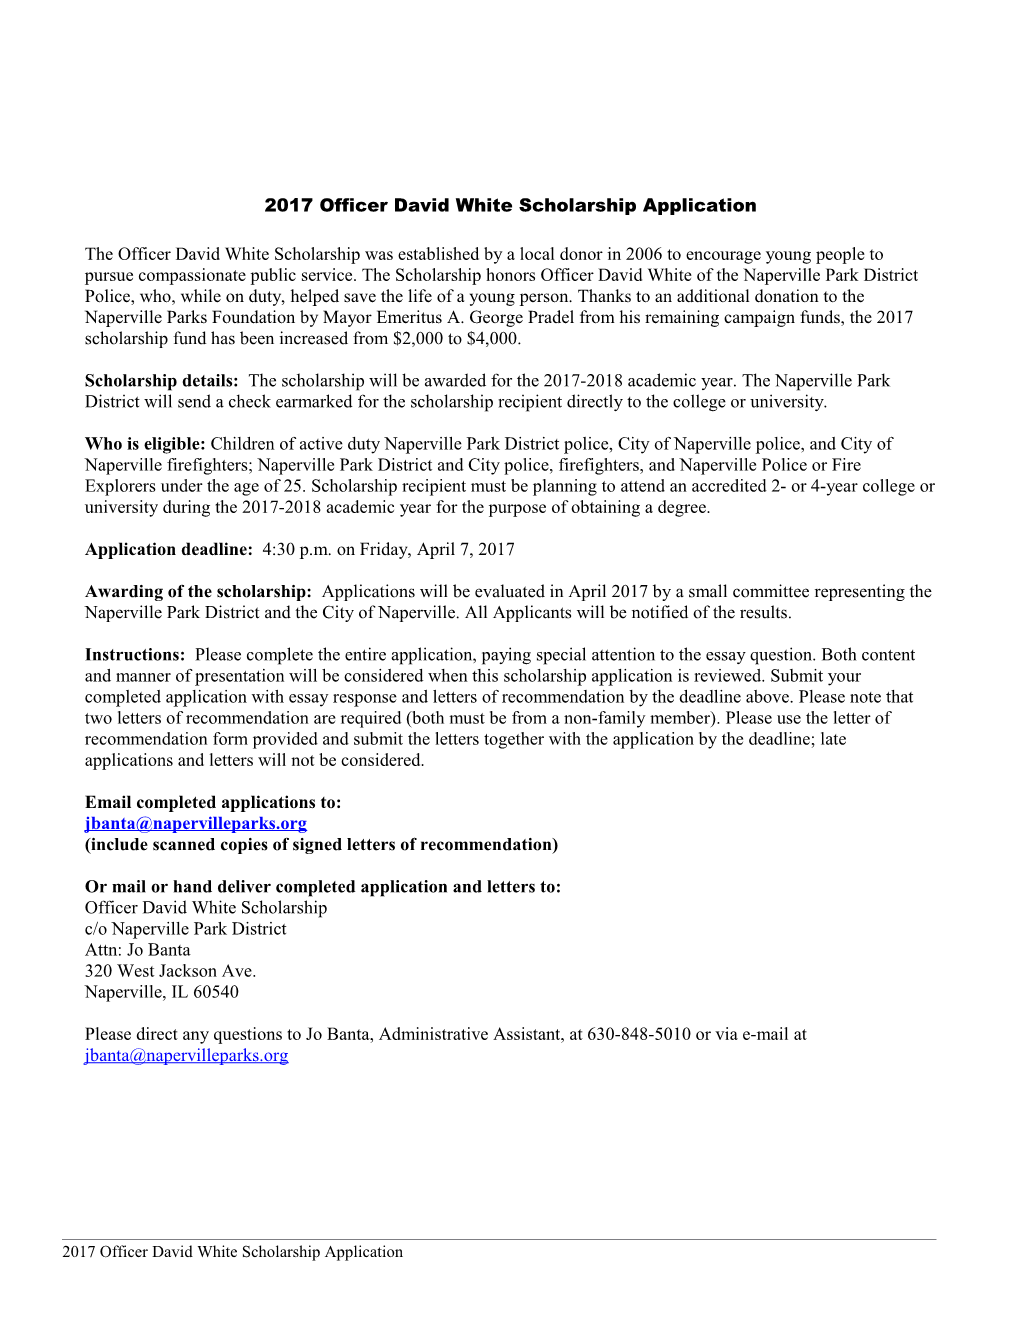 2017Officer David White Scholarship Application